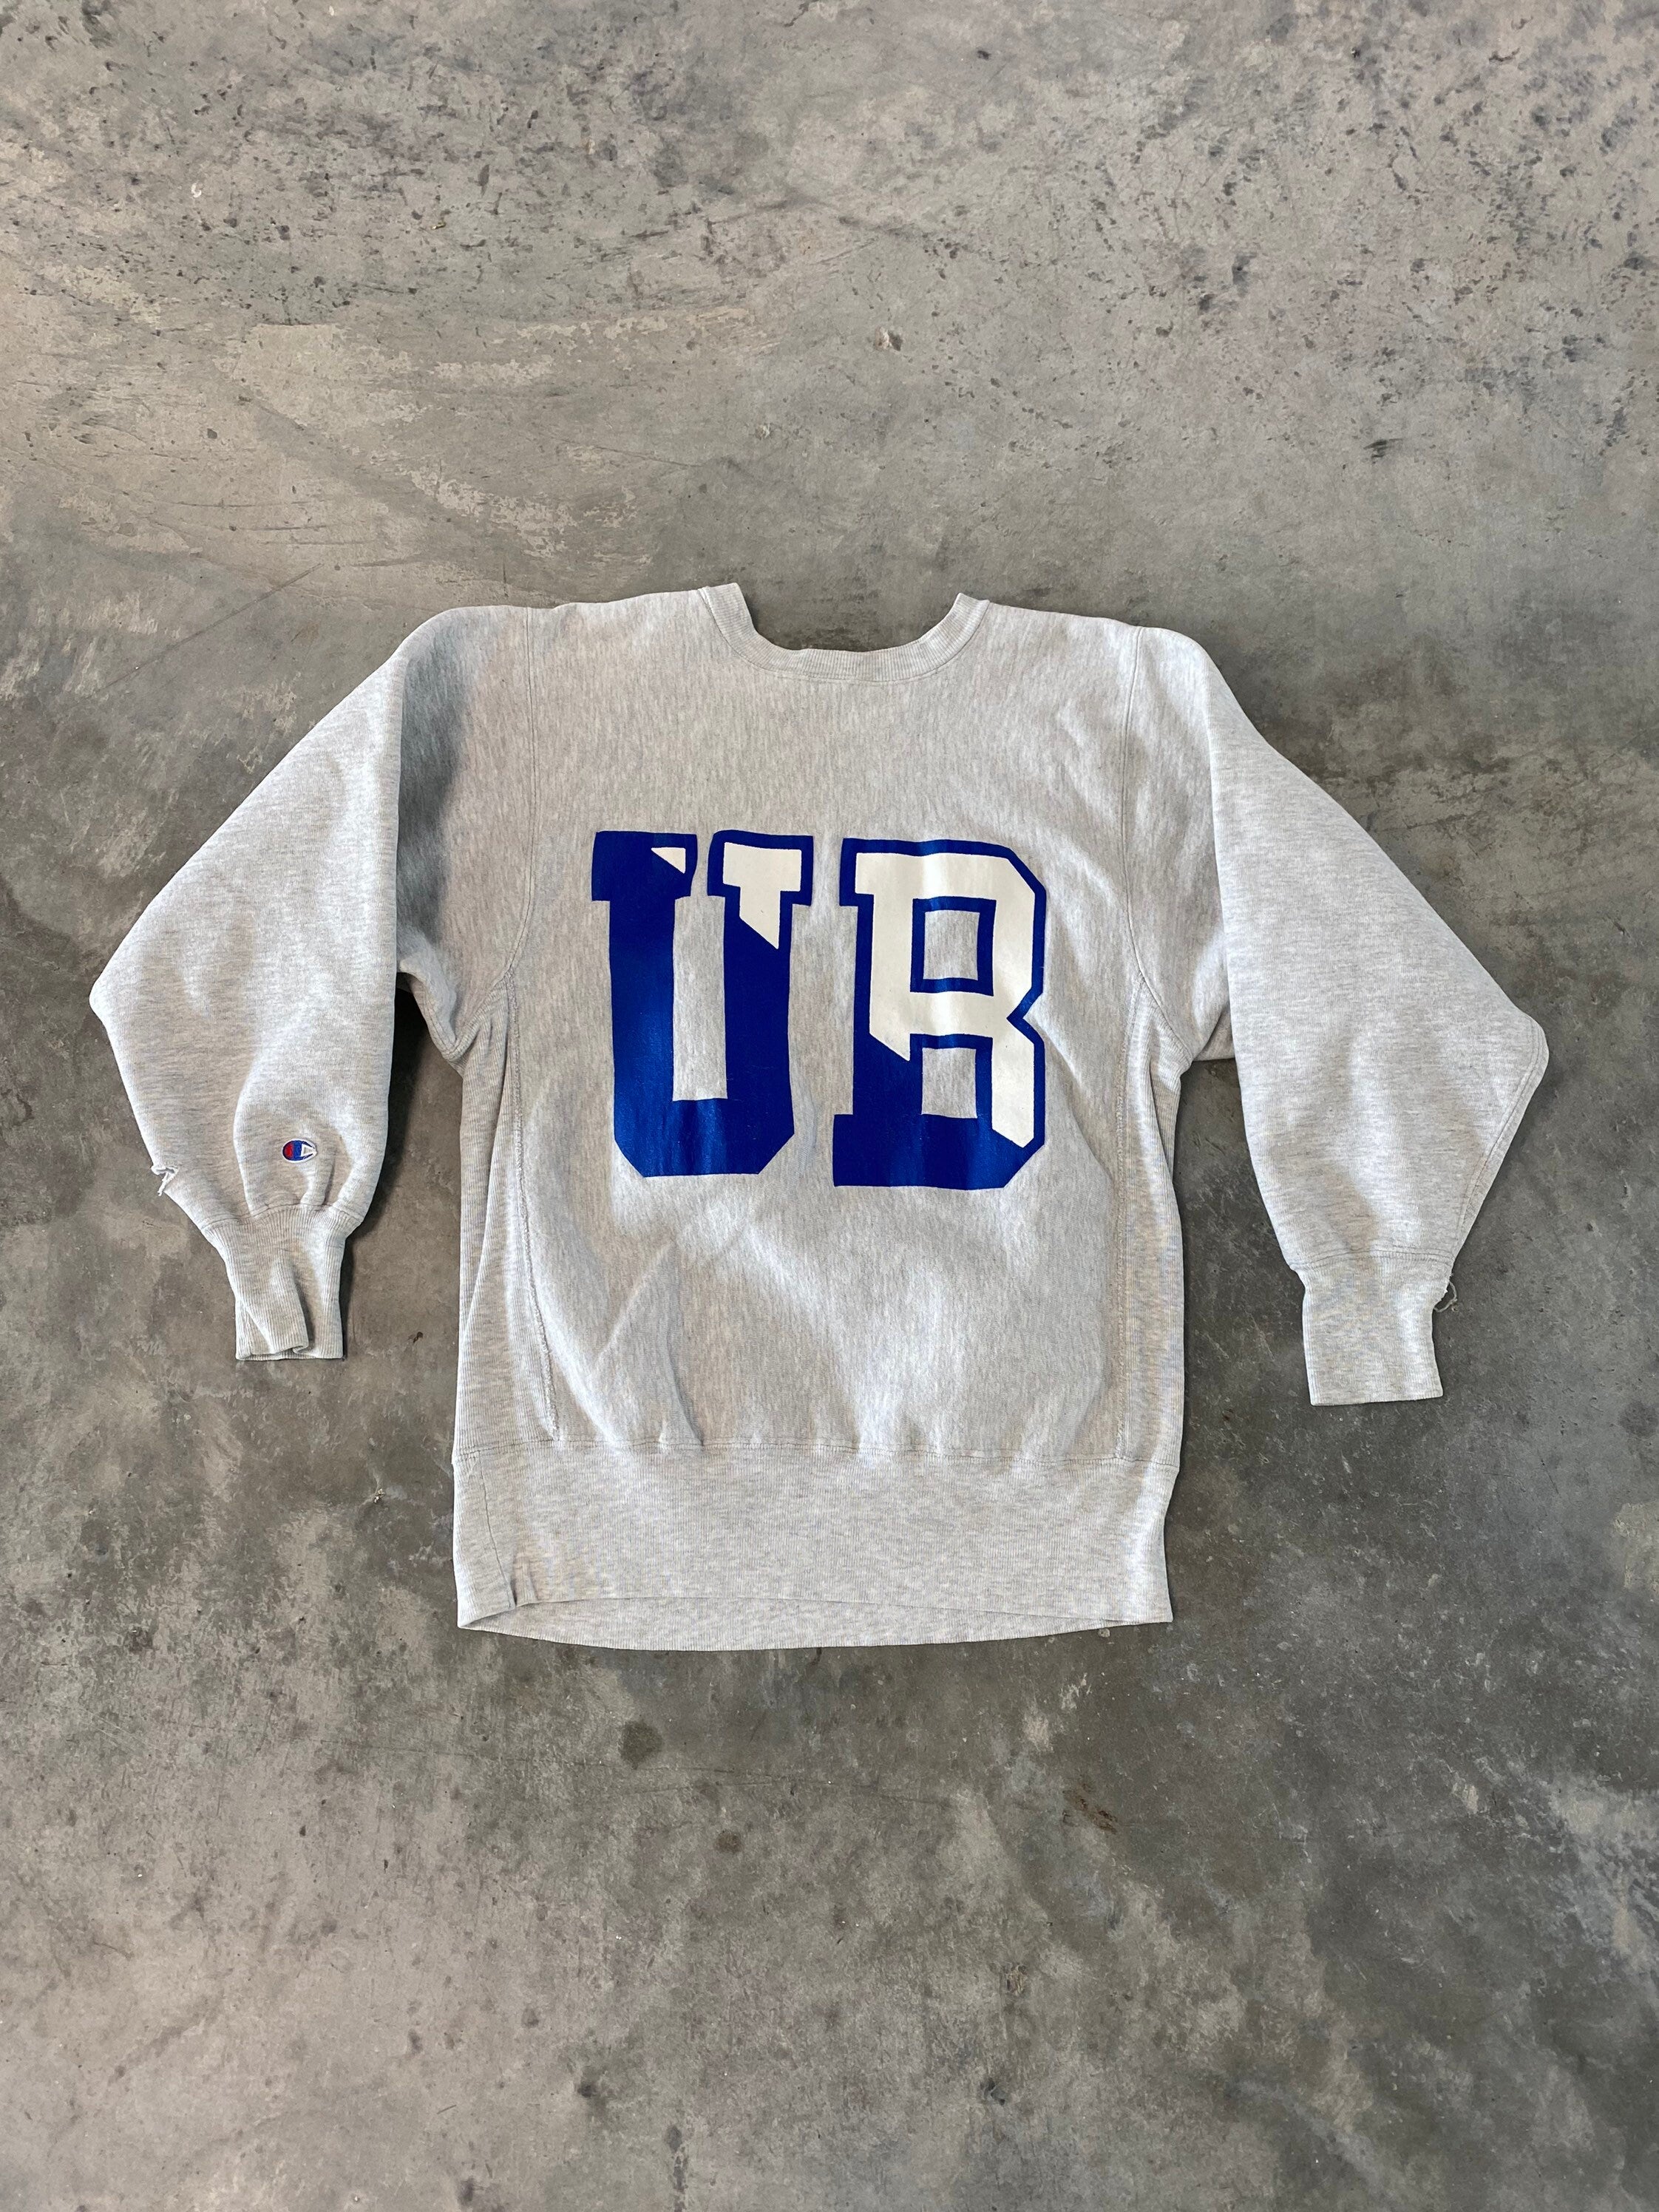 Vintage 90s Champion Reverse Weave University at Buffalo Sweatshirt Size Medium